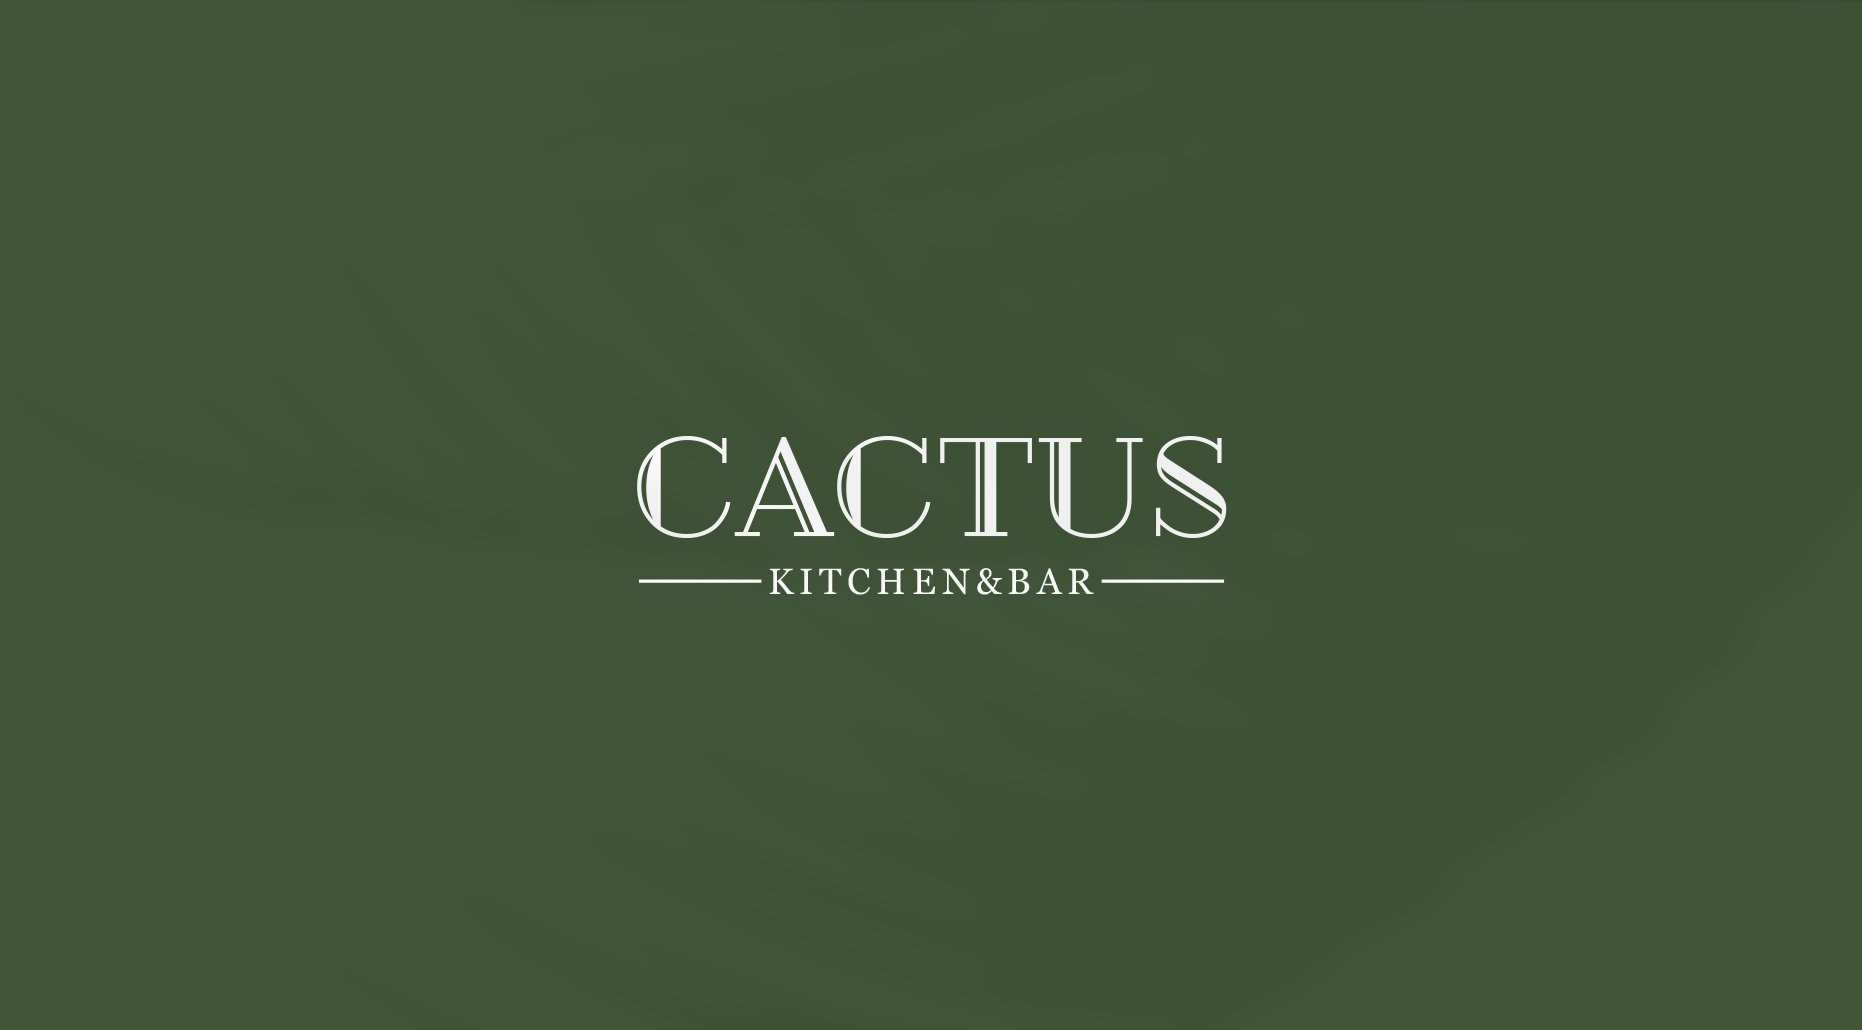 Cactus kitchen and Bar